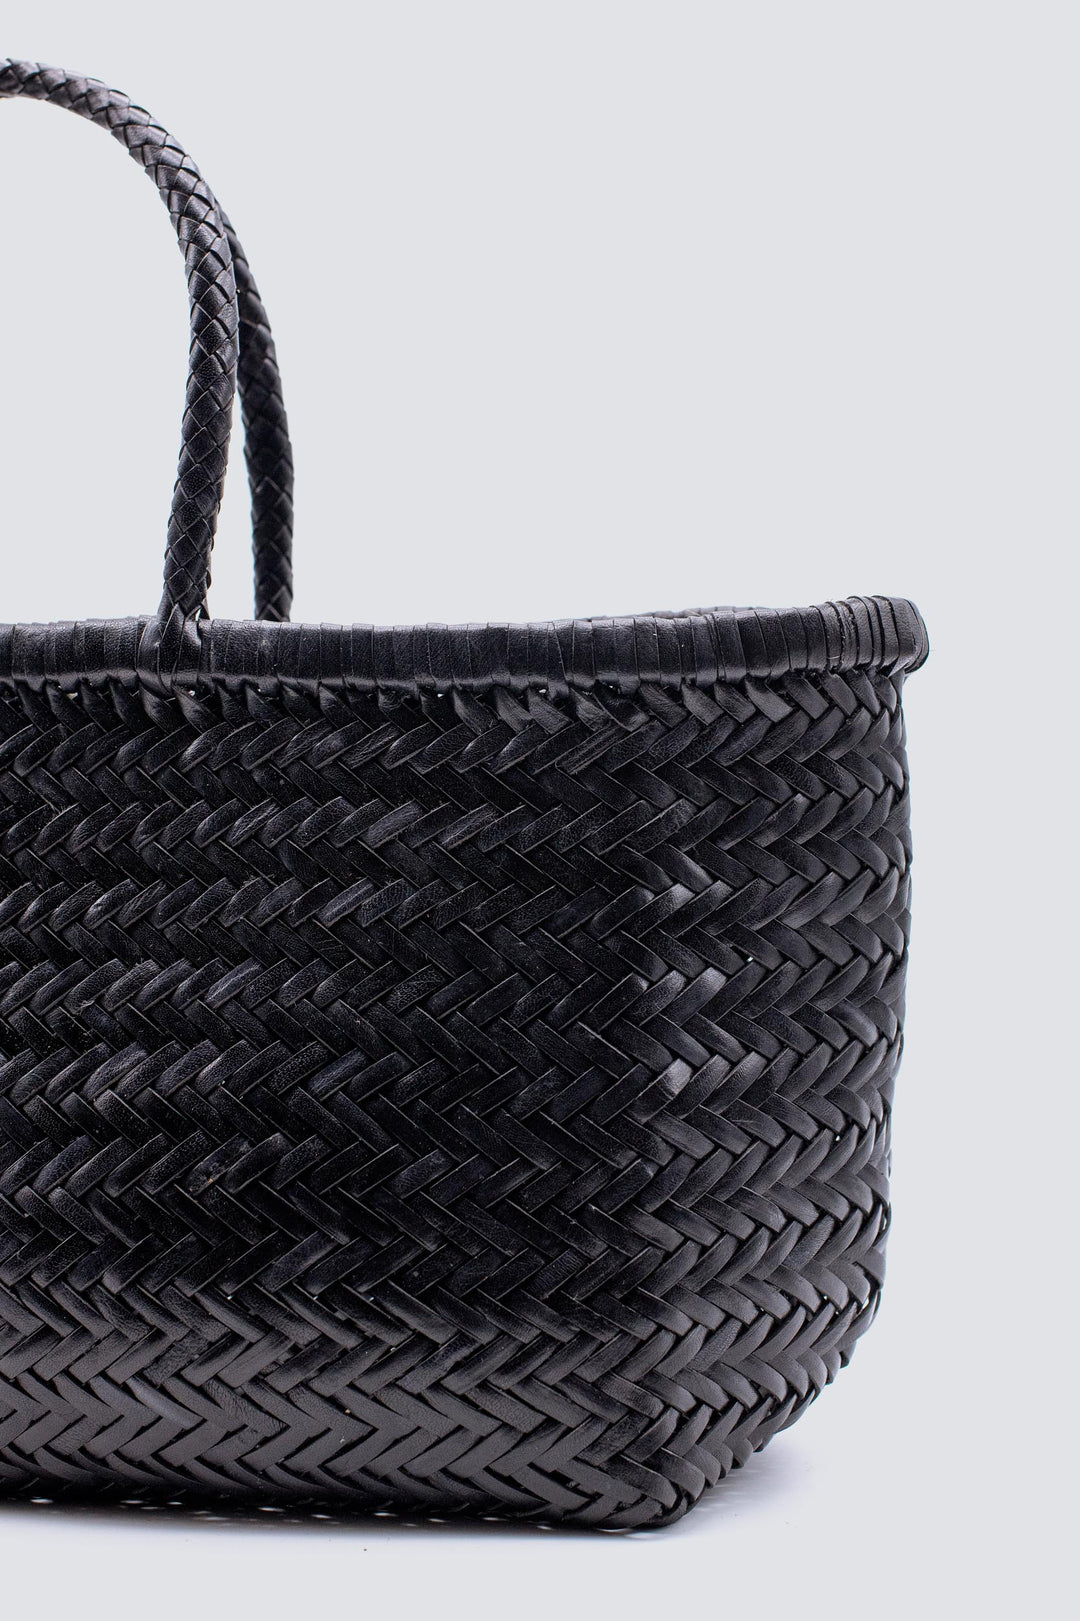 Dragon Diffusion woven leather bag handmade - Triple Jump Big Black